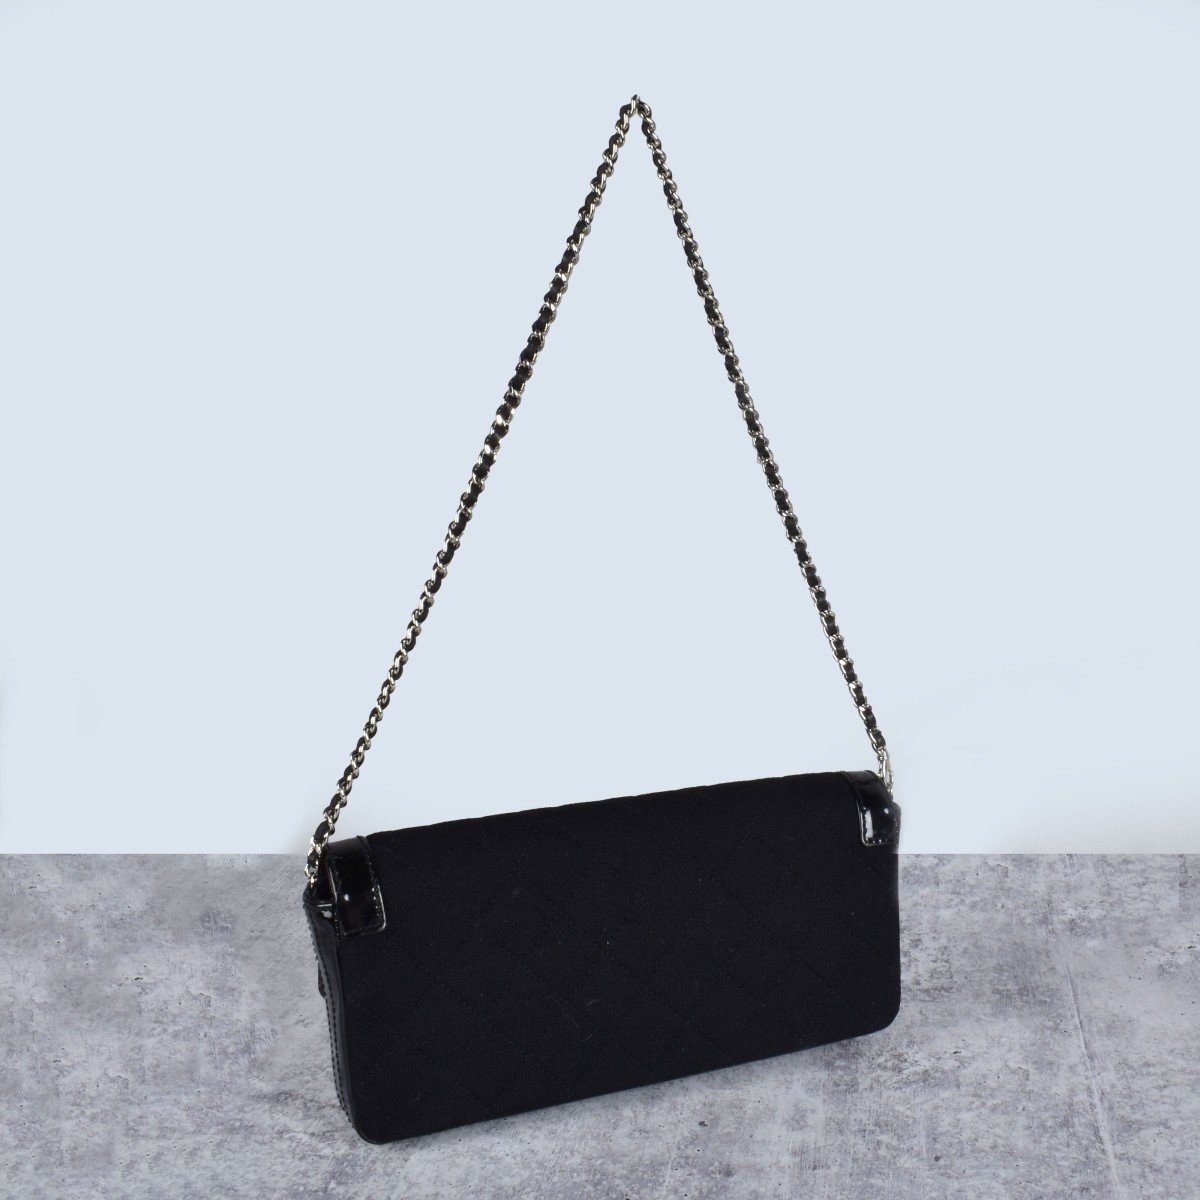 Chanel E/W Reissue Flap Bag